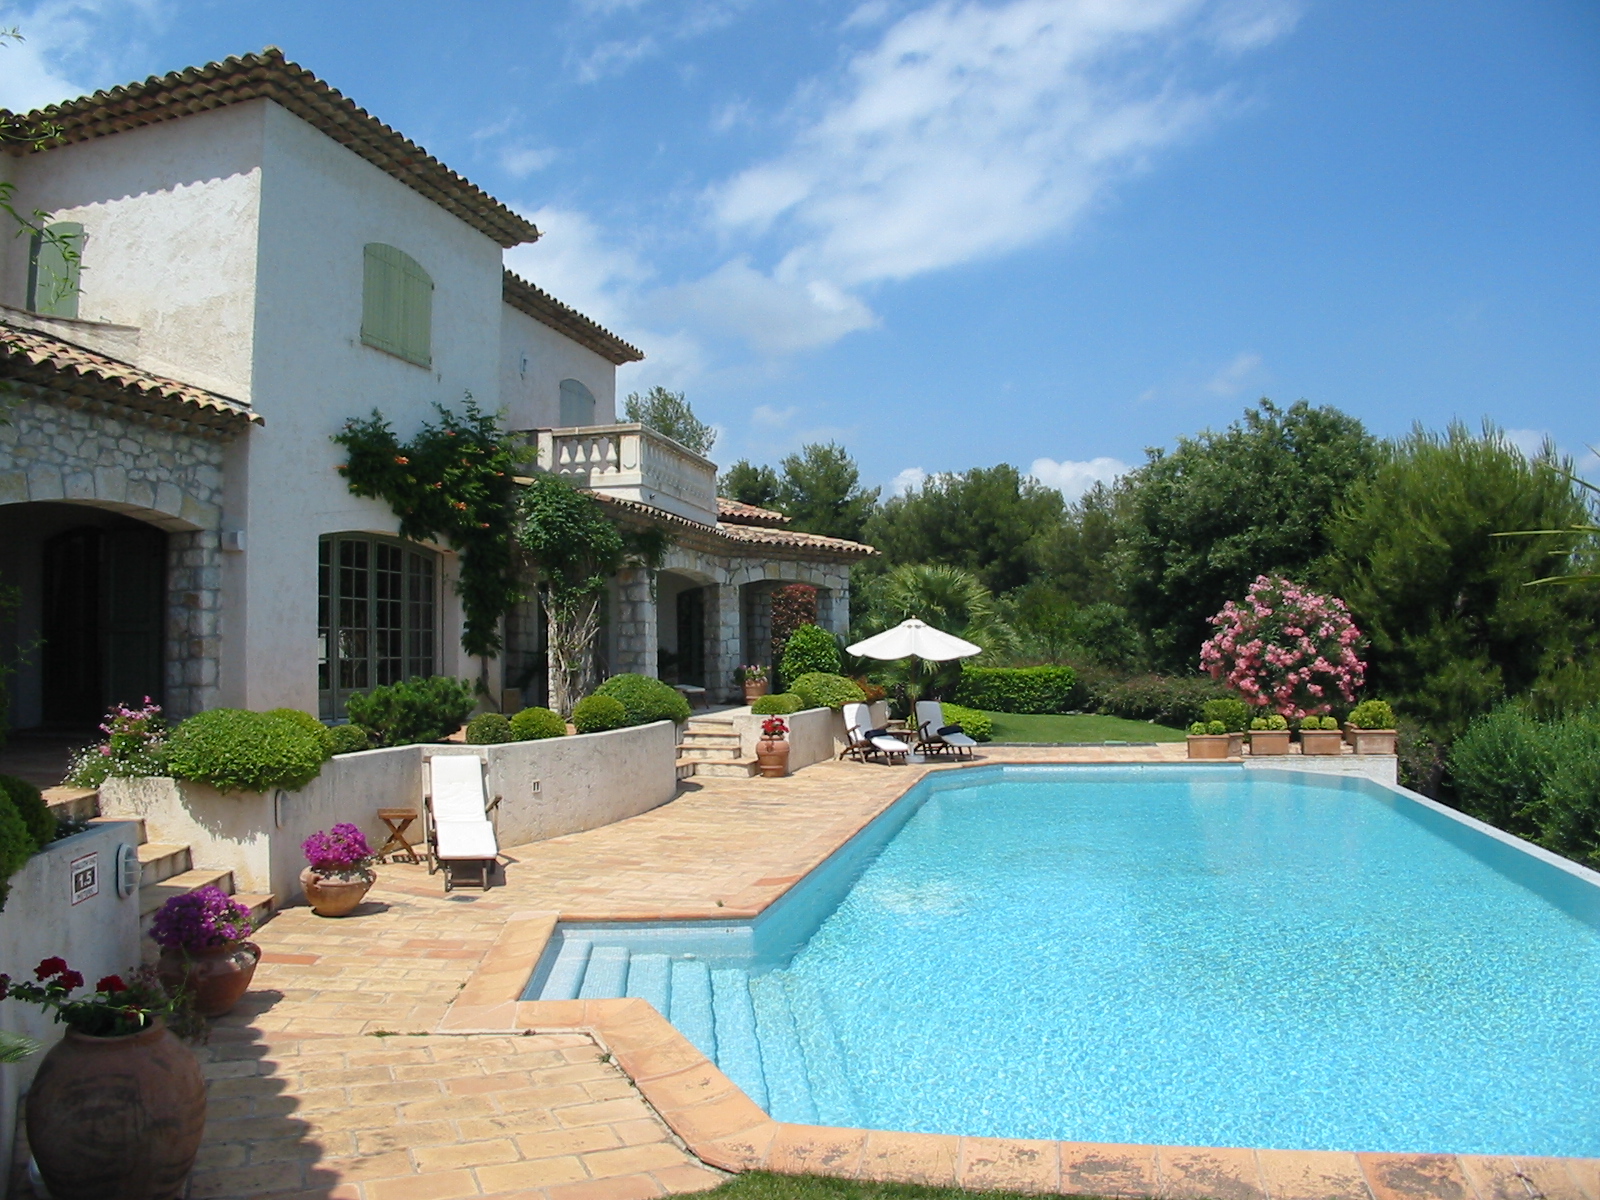 Villa Perriere in Cote d'Azur, France - White Blancmange